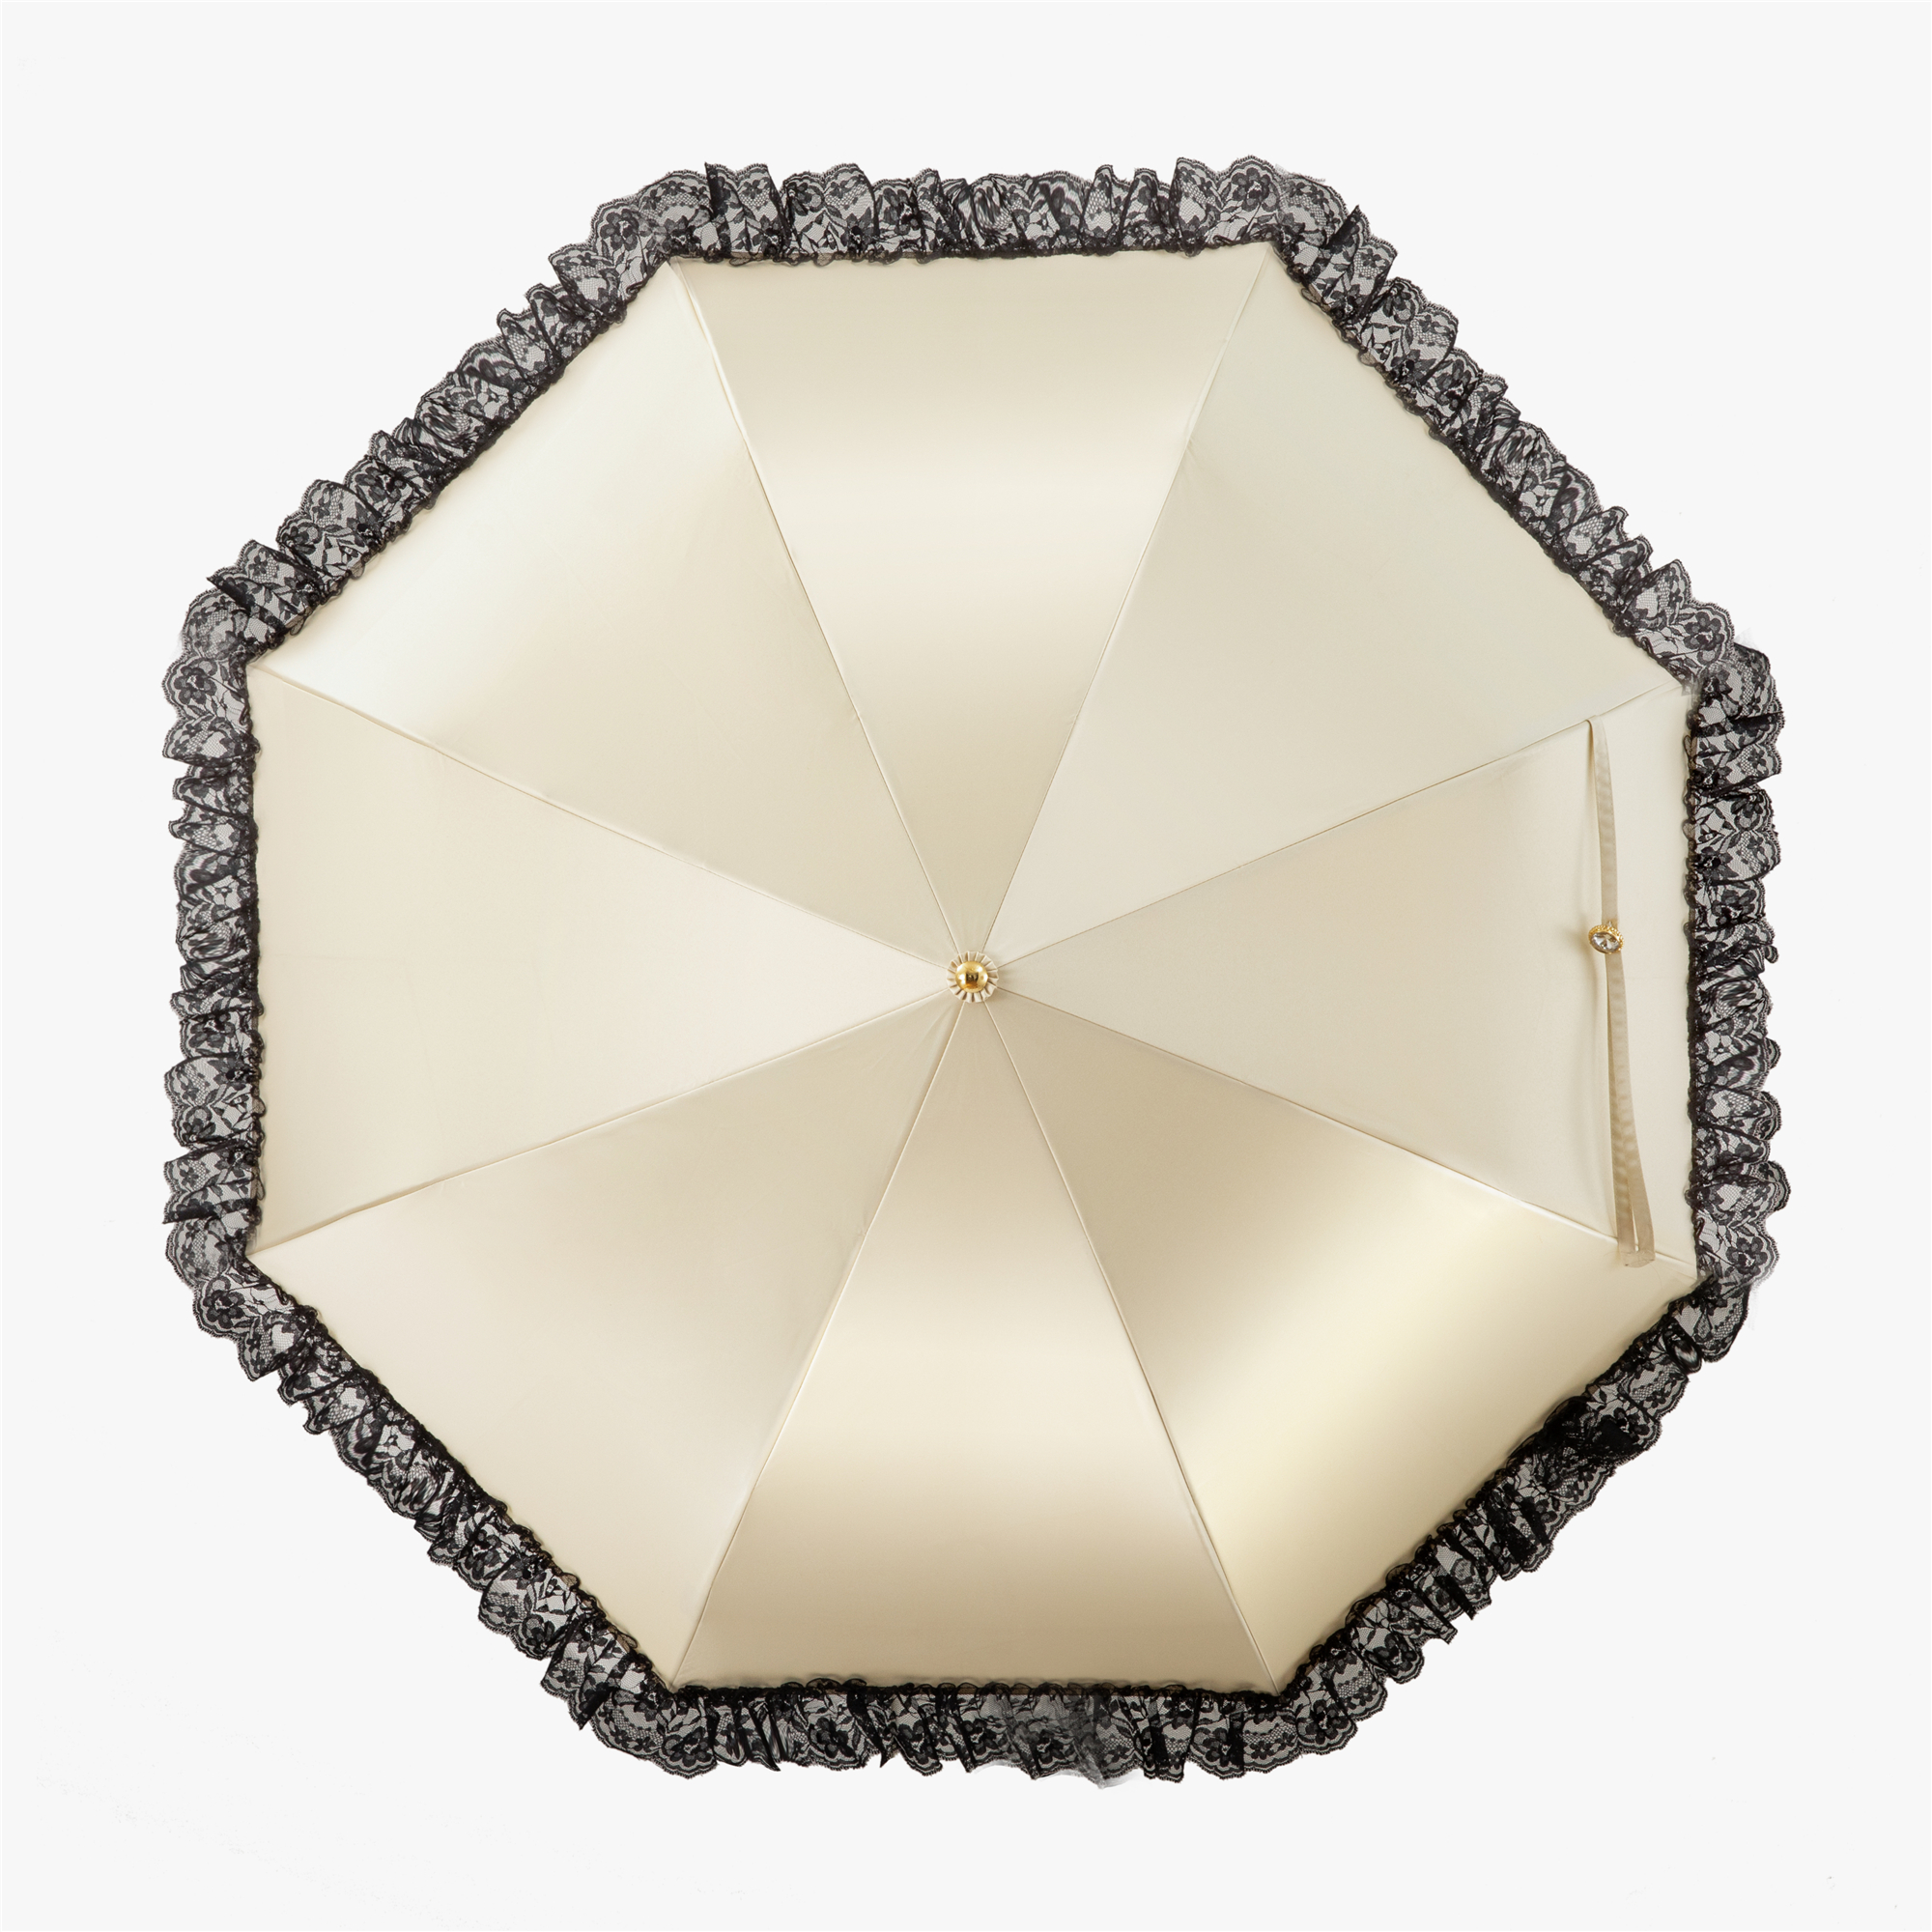 Diamond-encrusted bent folding umbrella